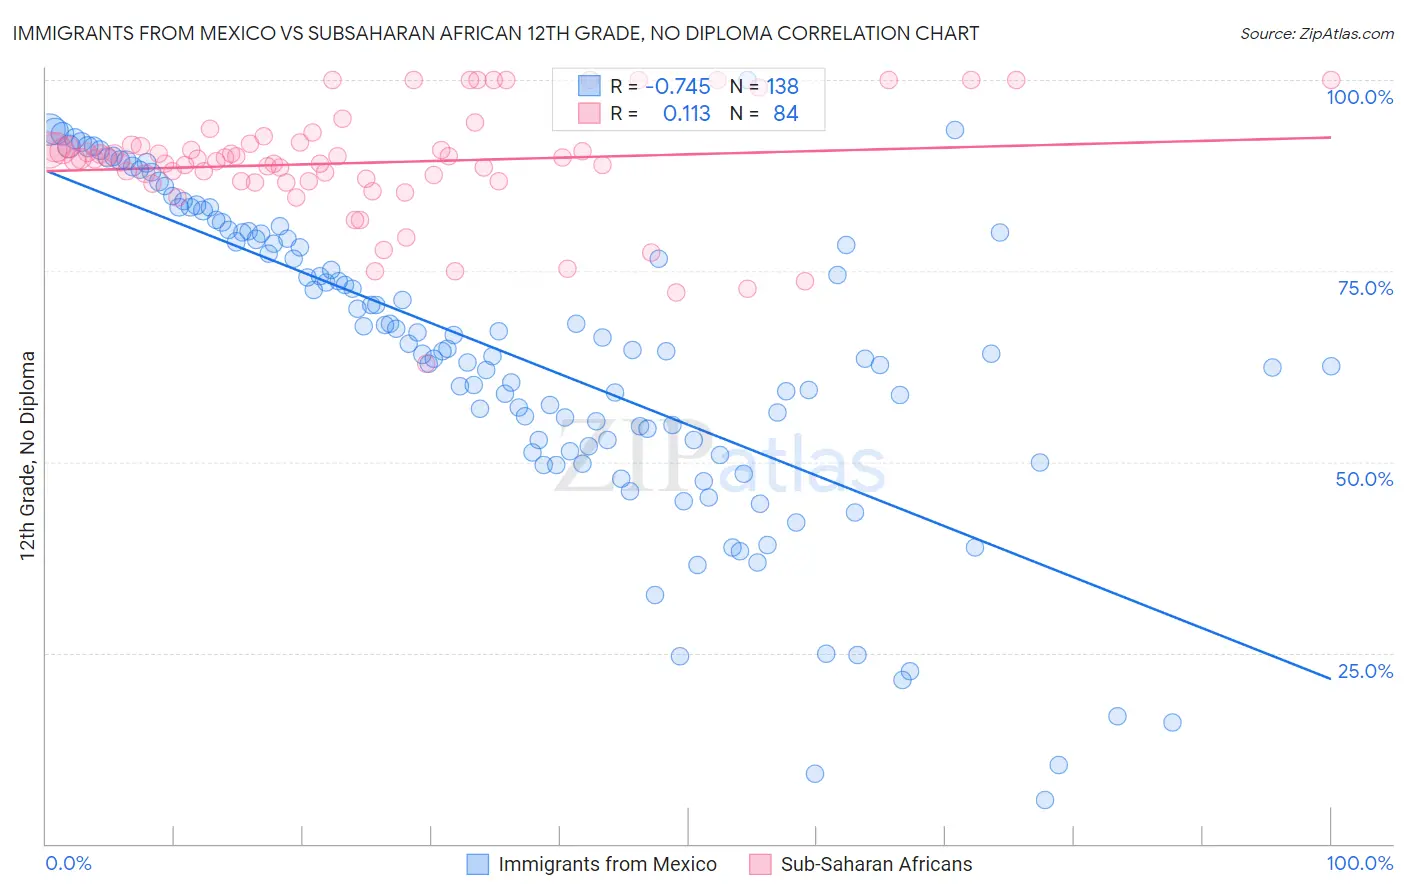 Immigrants from Mexico vs Subsaharan African 12th Grade, No Diploma